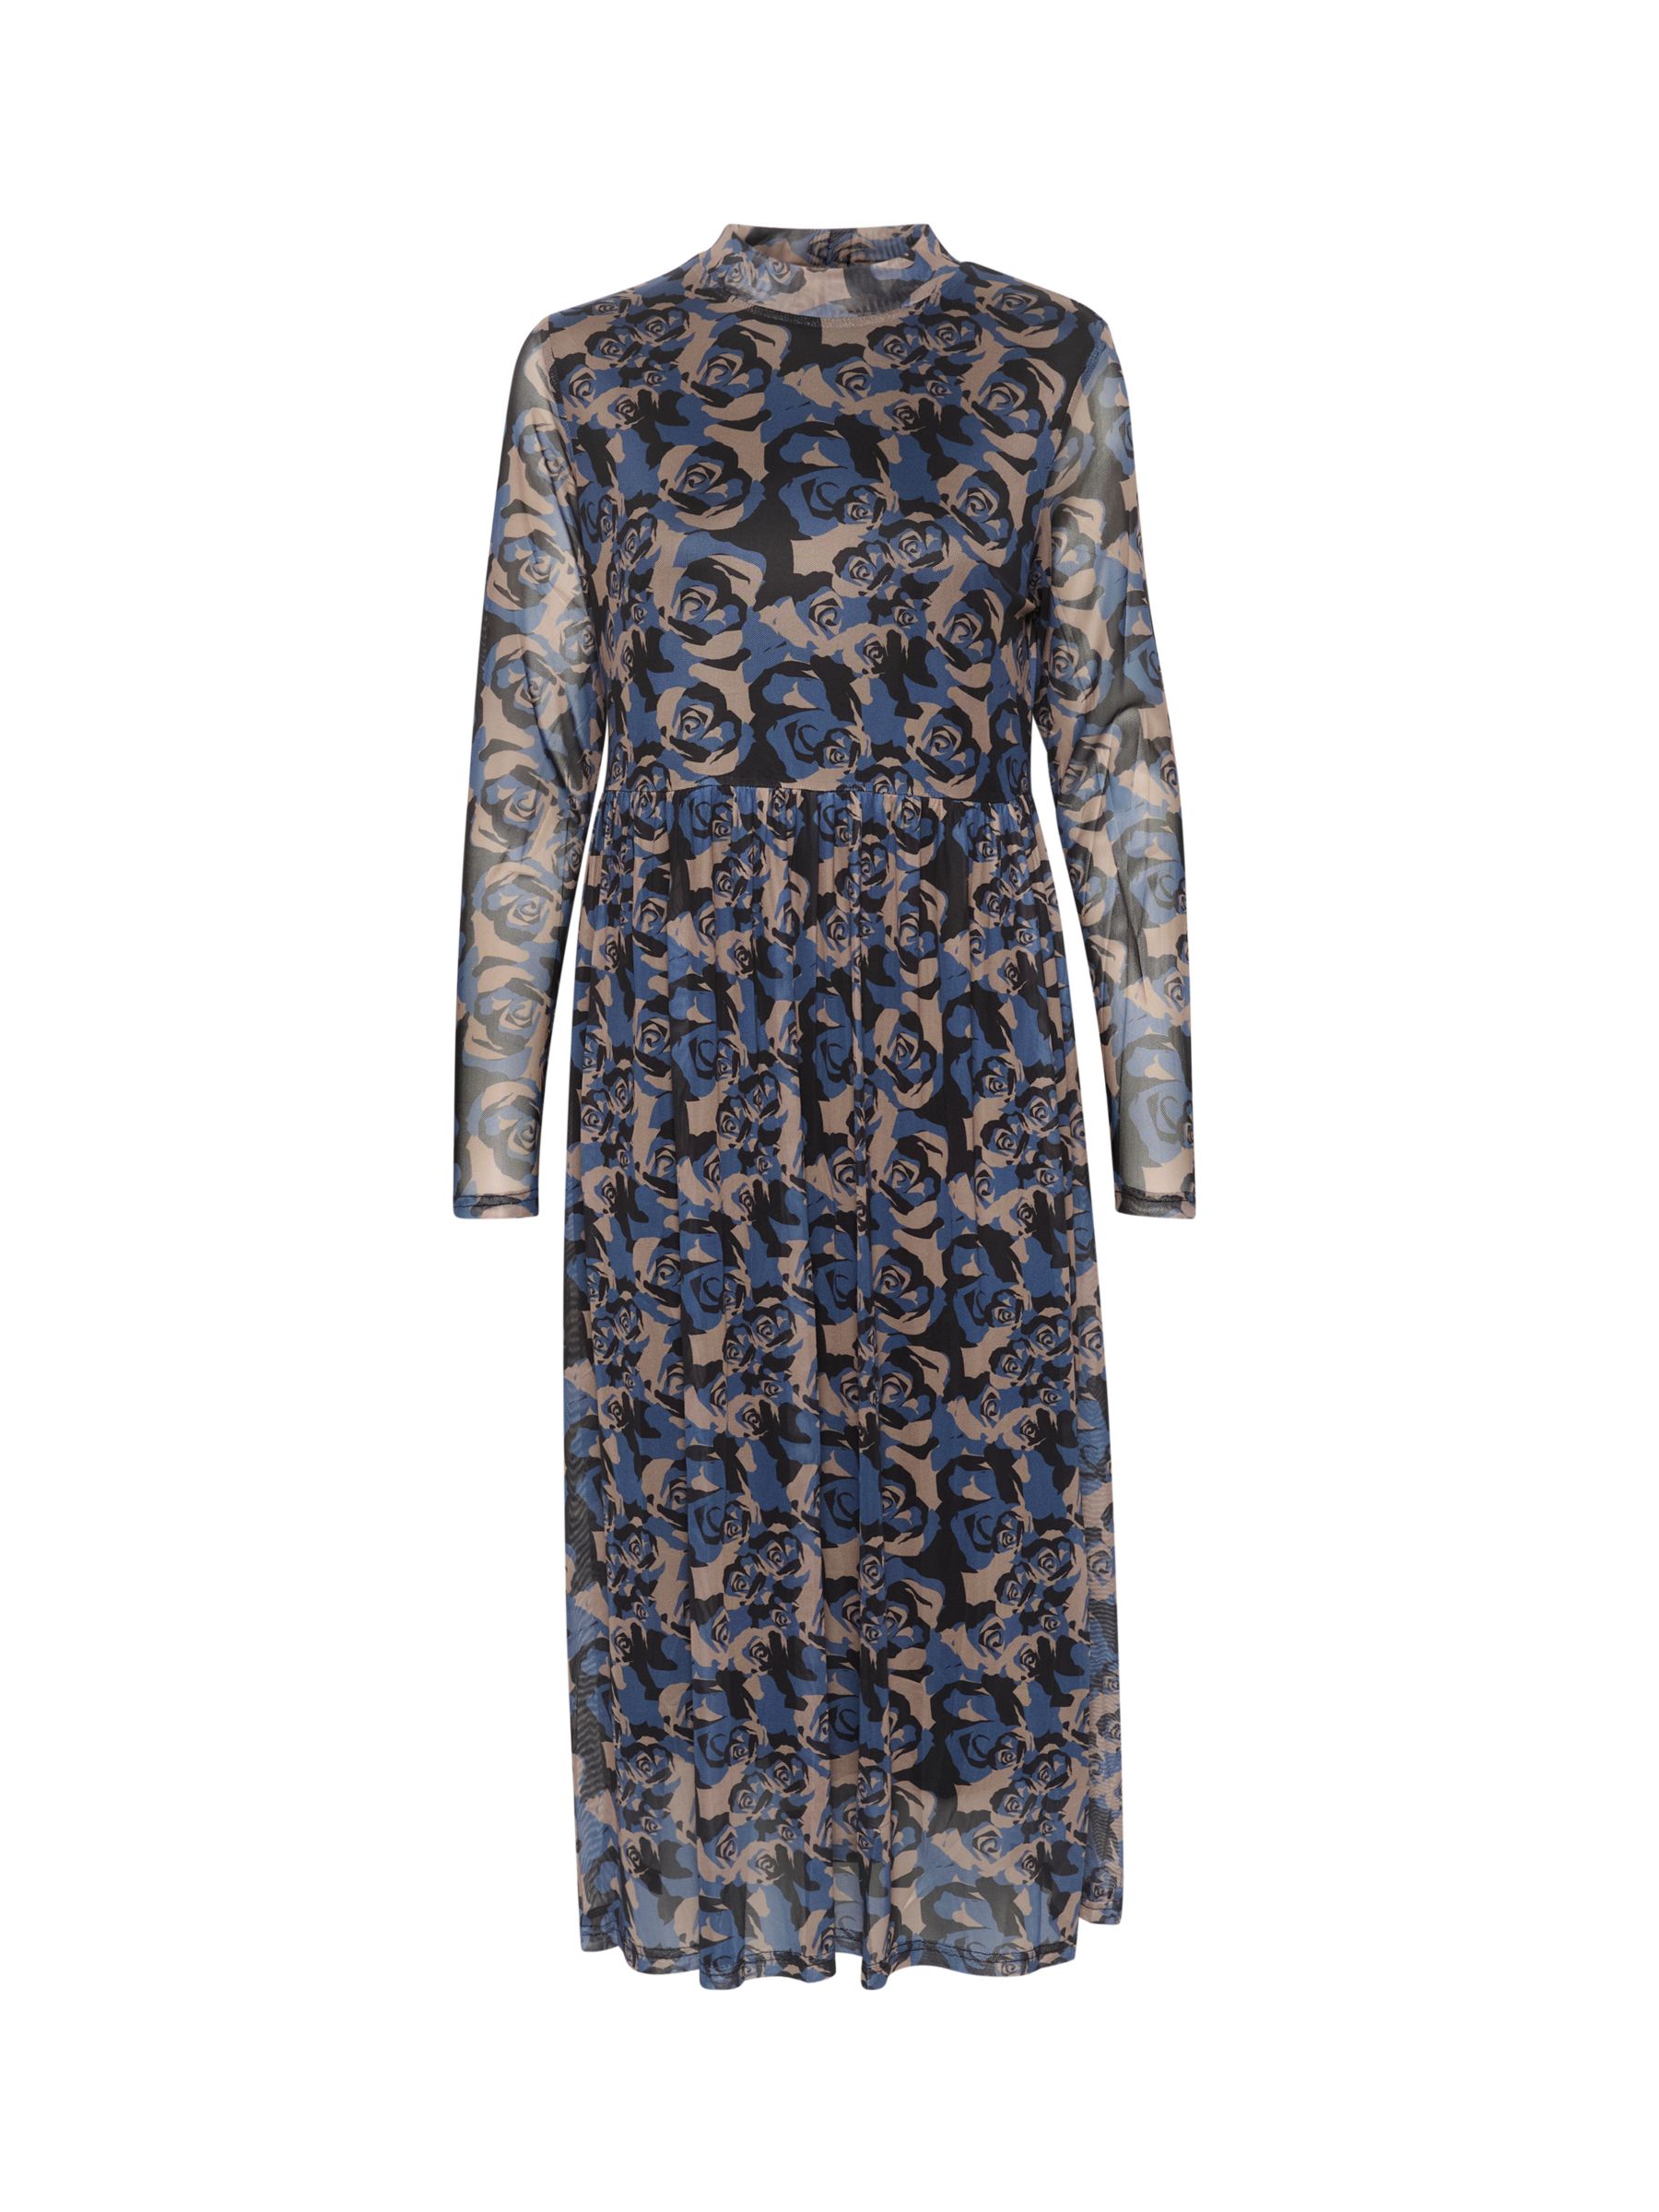 KAFFE Ellie Abstract Print Midi Dress, Multi at John Lewis & Partners